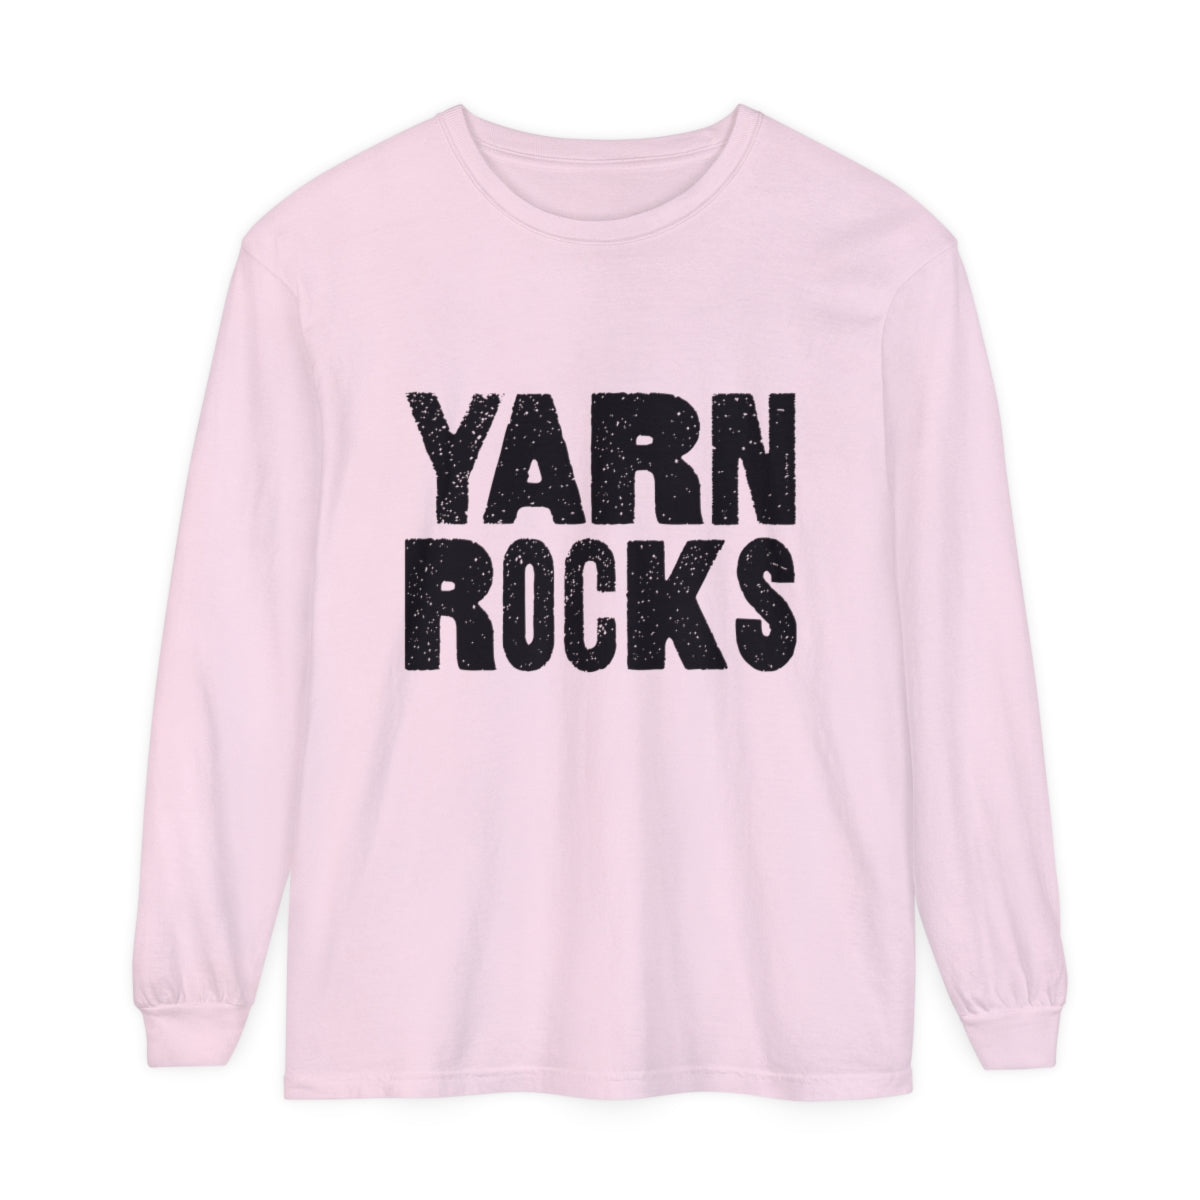 Yarn Rocks Garment-Dyed 100% Cotton Long-Sleeve T-Shirt